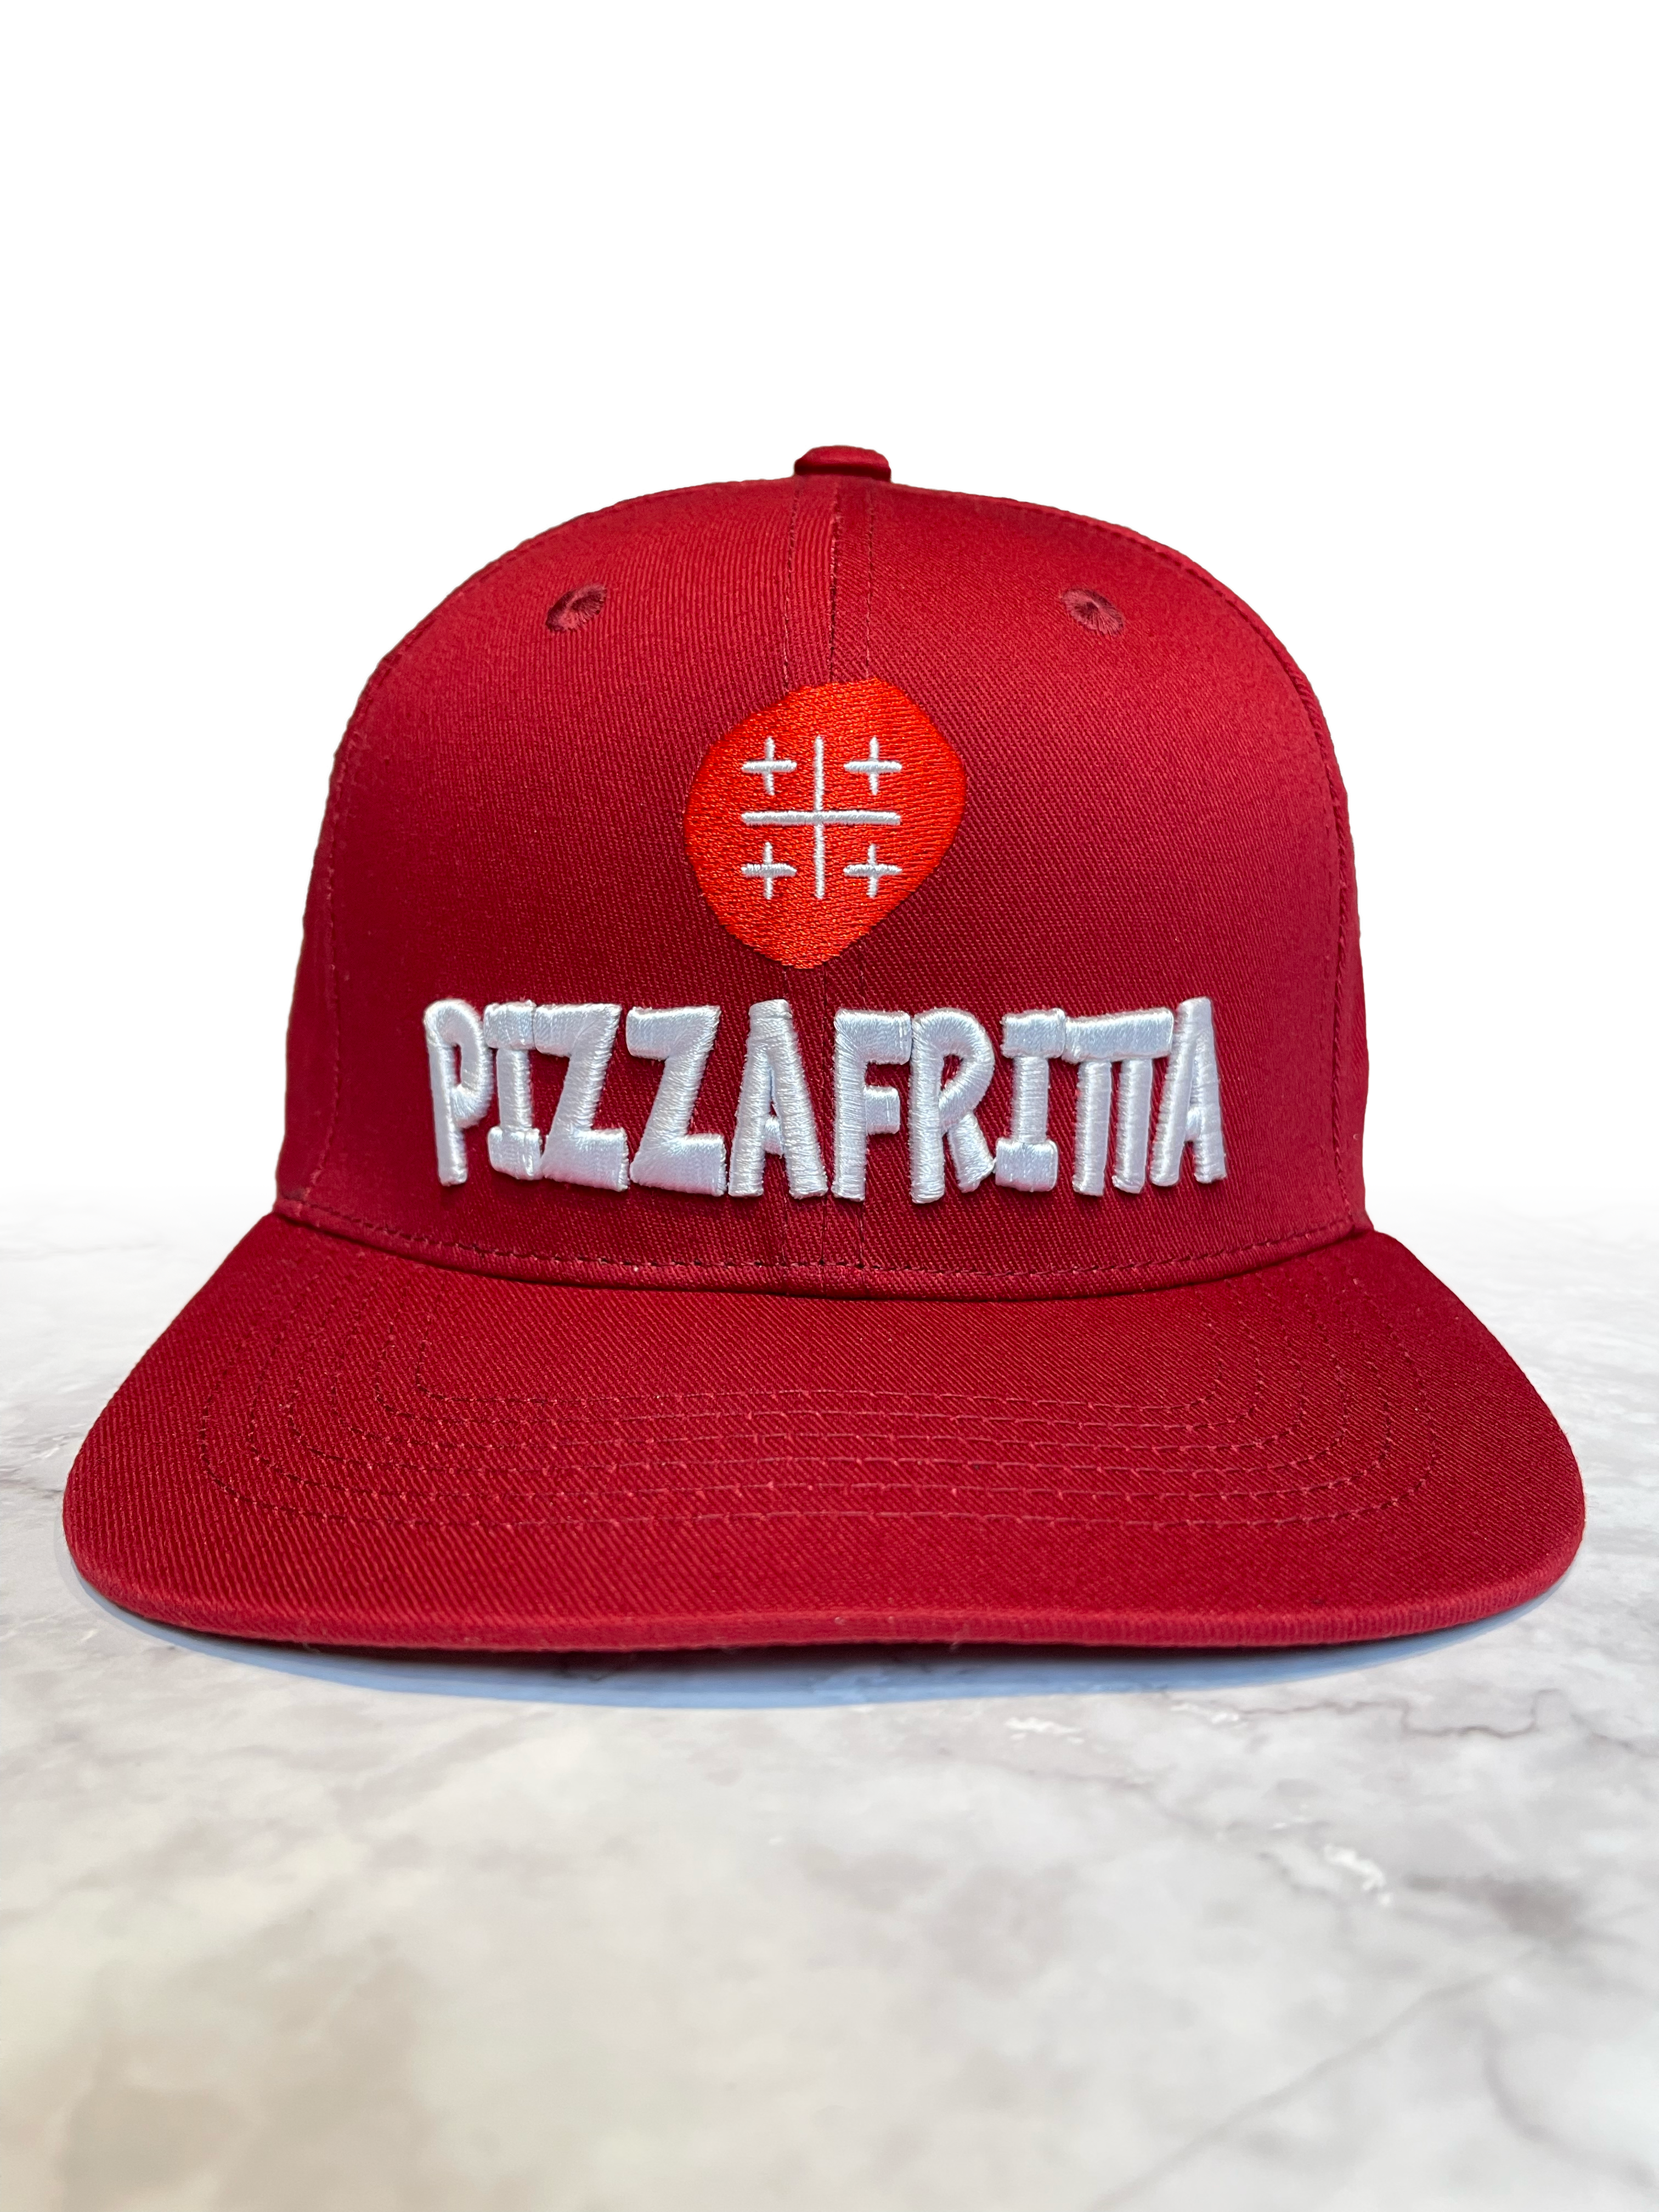 Limited Edition Don Antonio Hat "PizzaFritta"